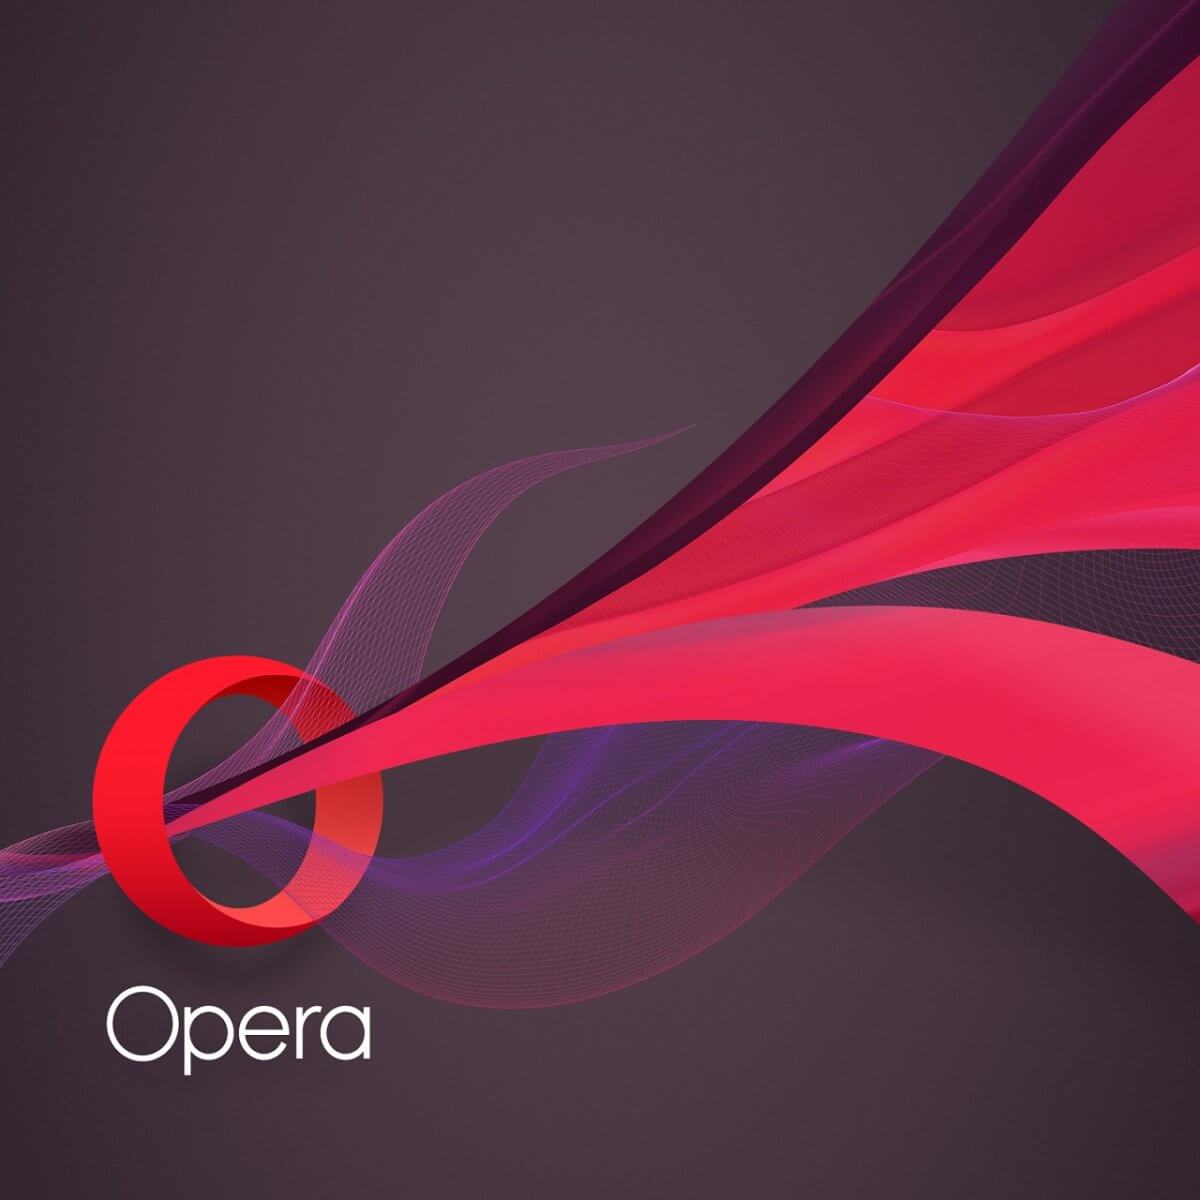 Opera GX 99.0.4788.75 for apple instal